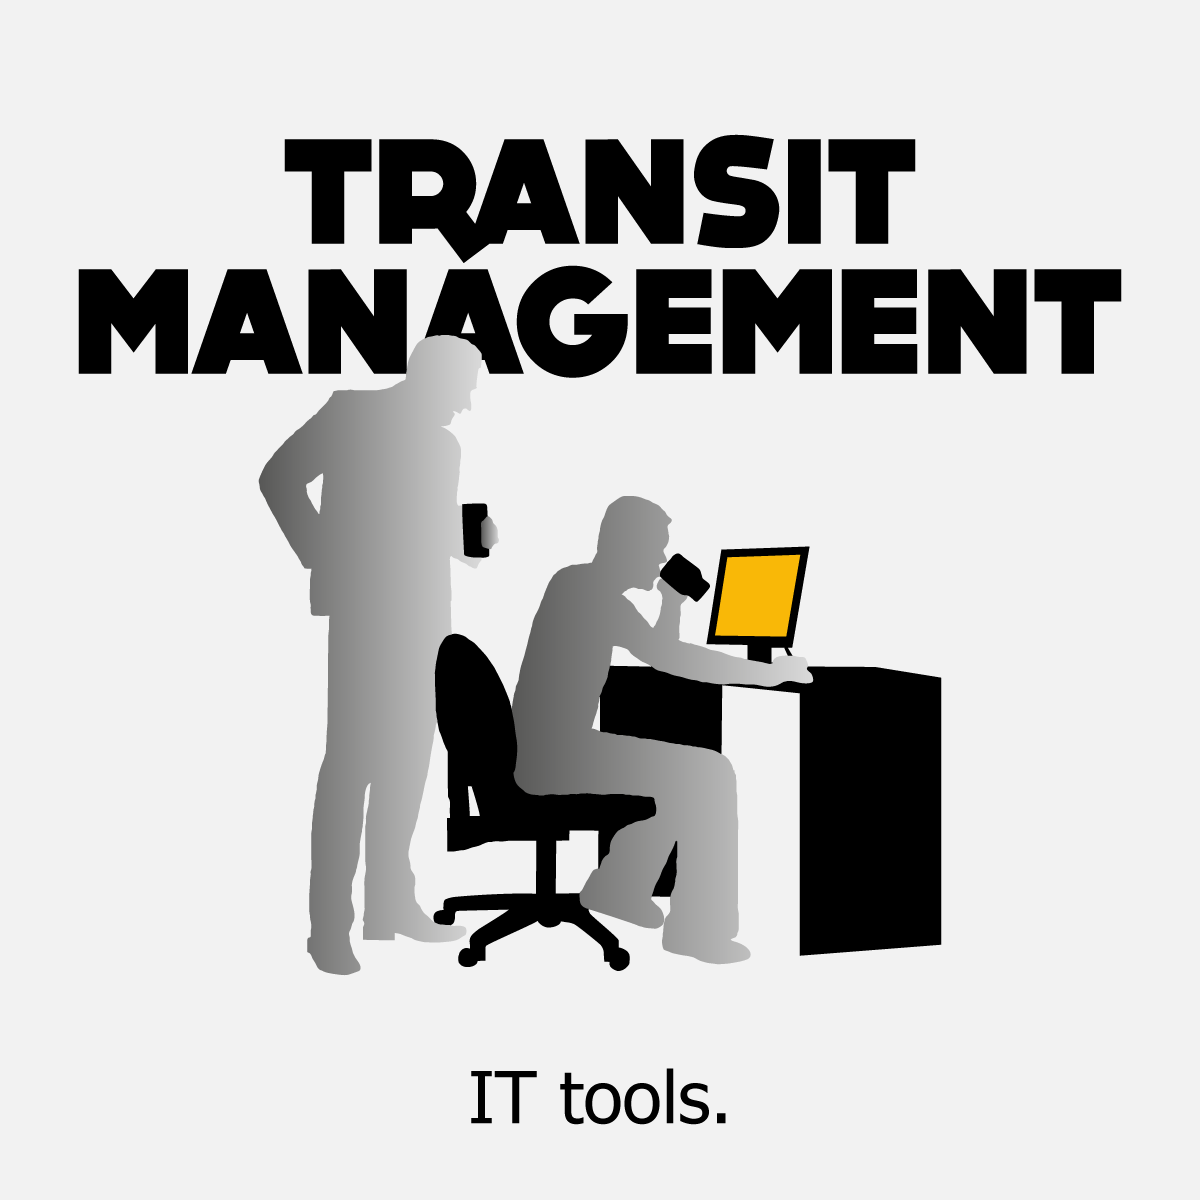 Transit management